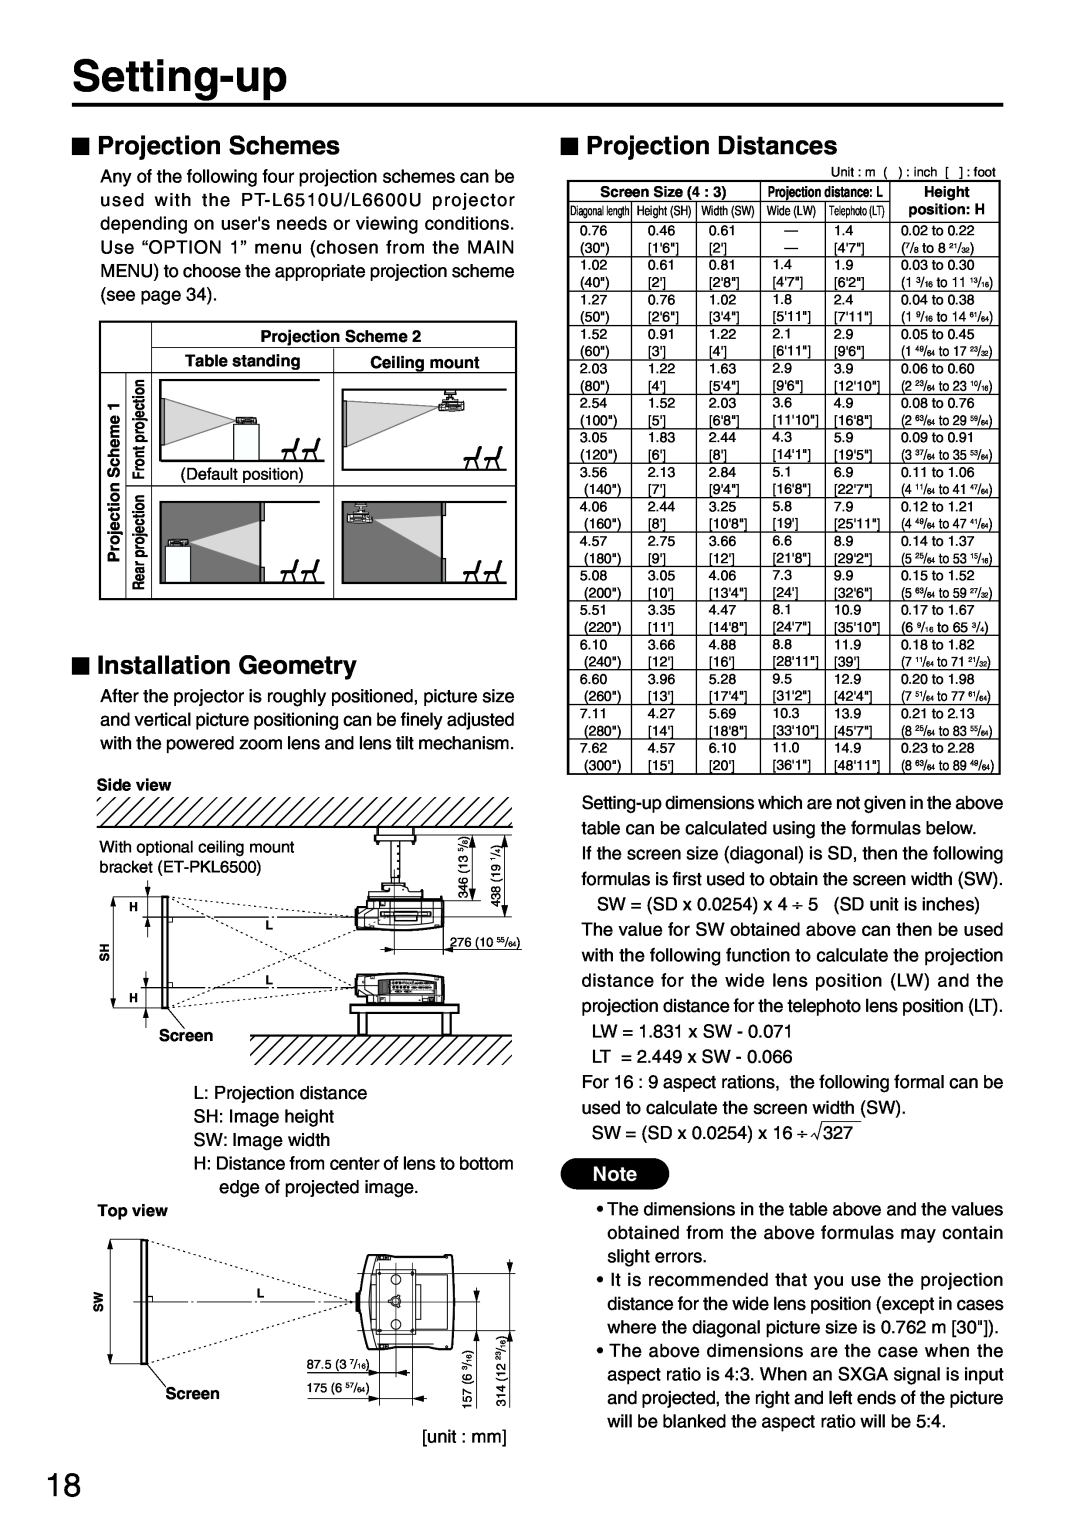 Panasonic PT-L6510U manual Setting-up, Projection Schemes, Installation Geometry, Projection Distances 